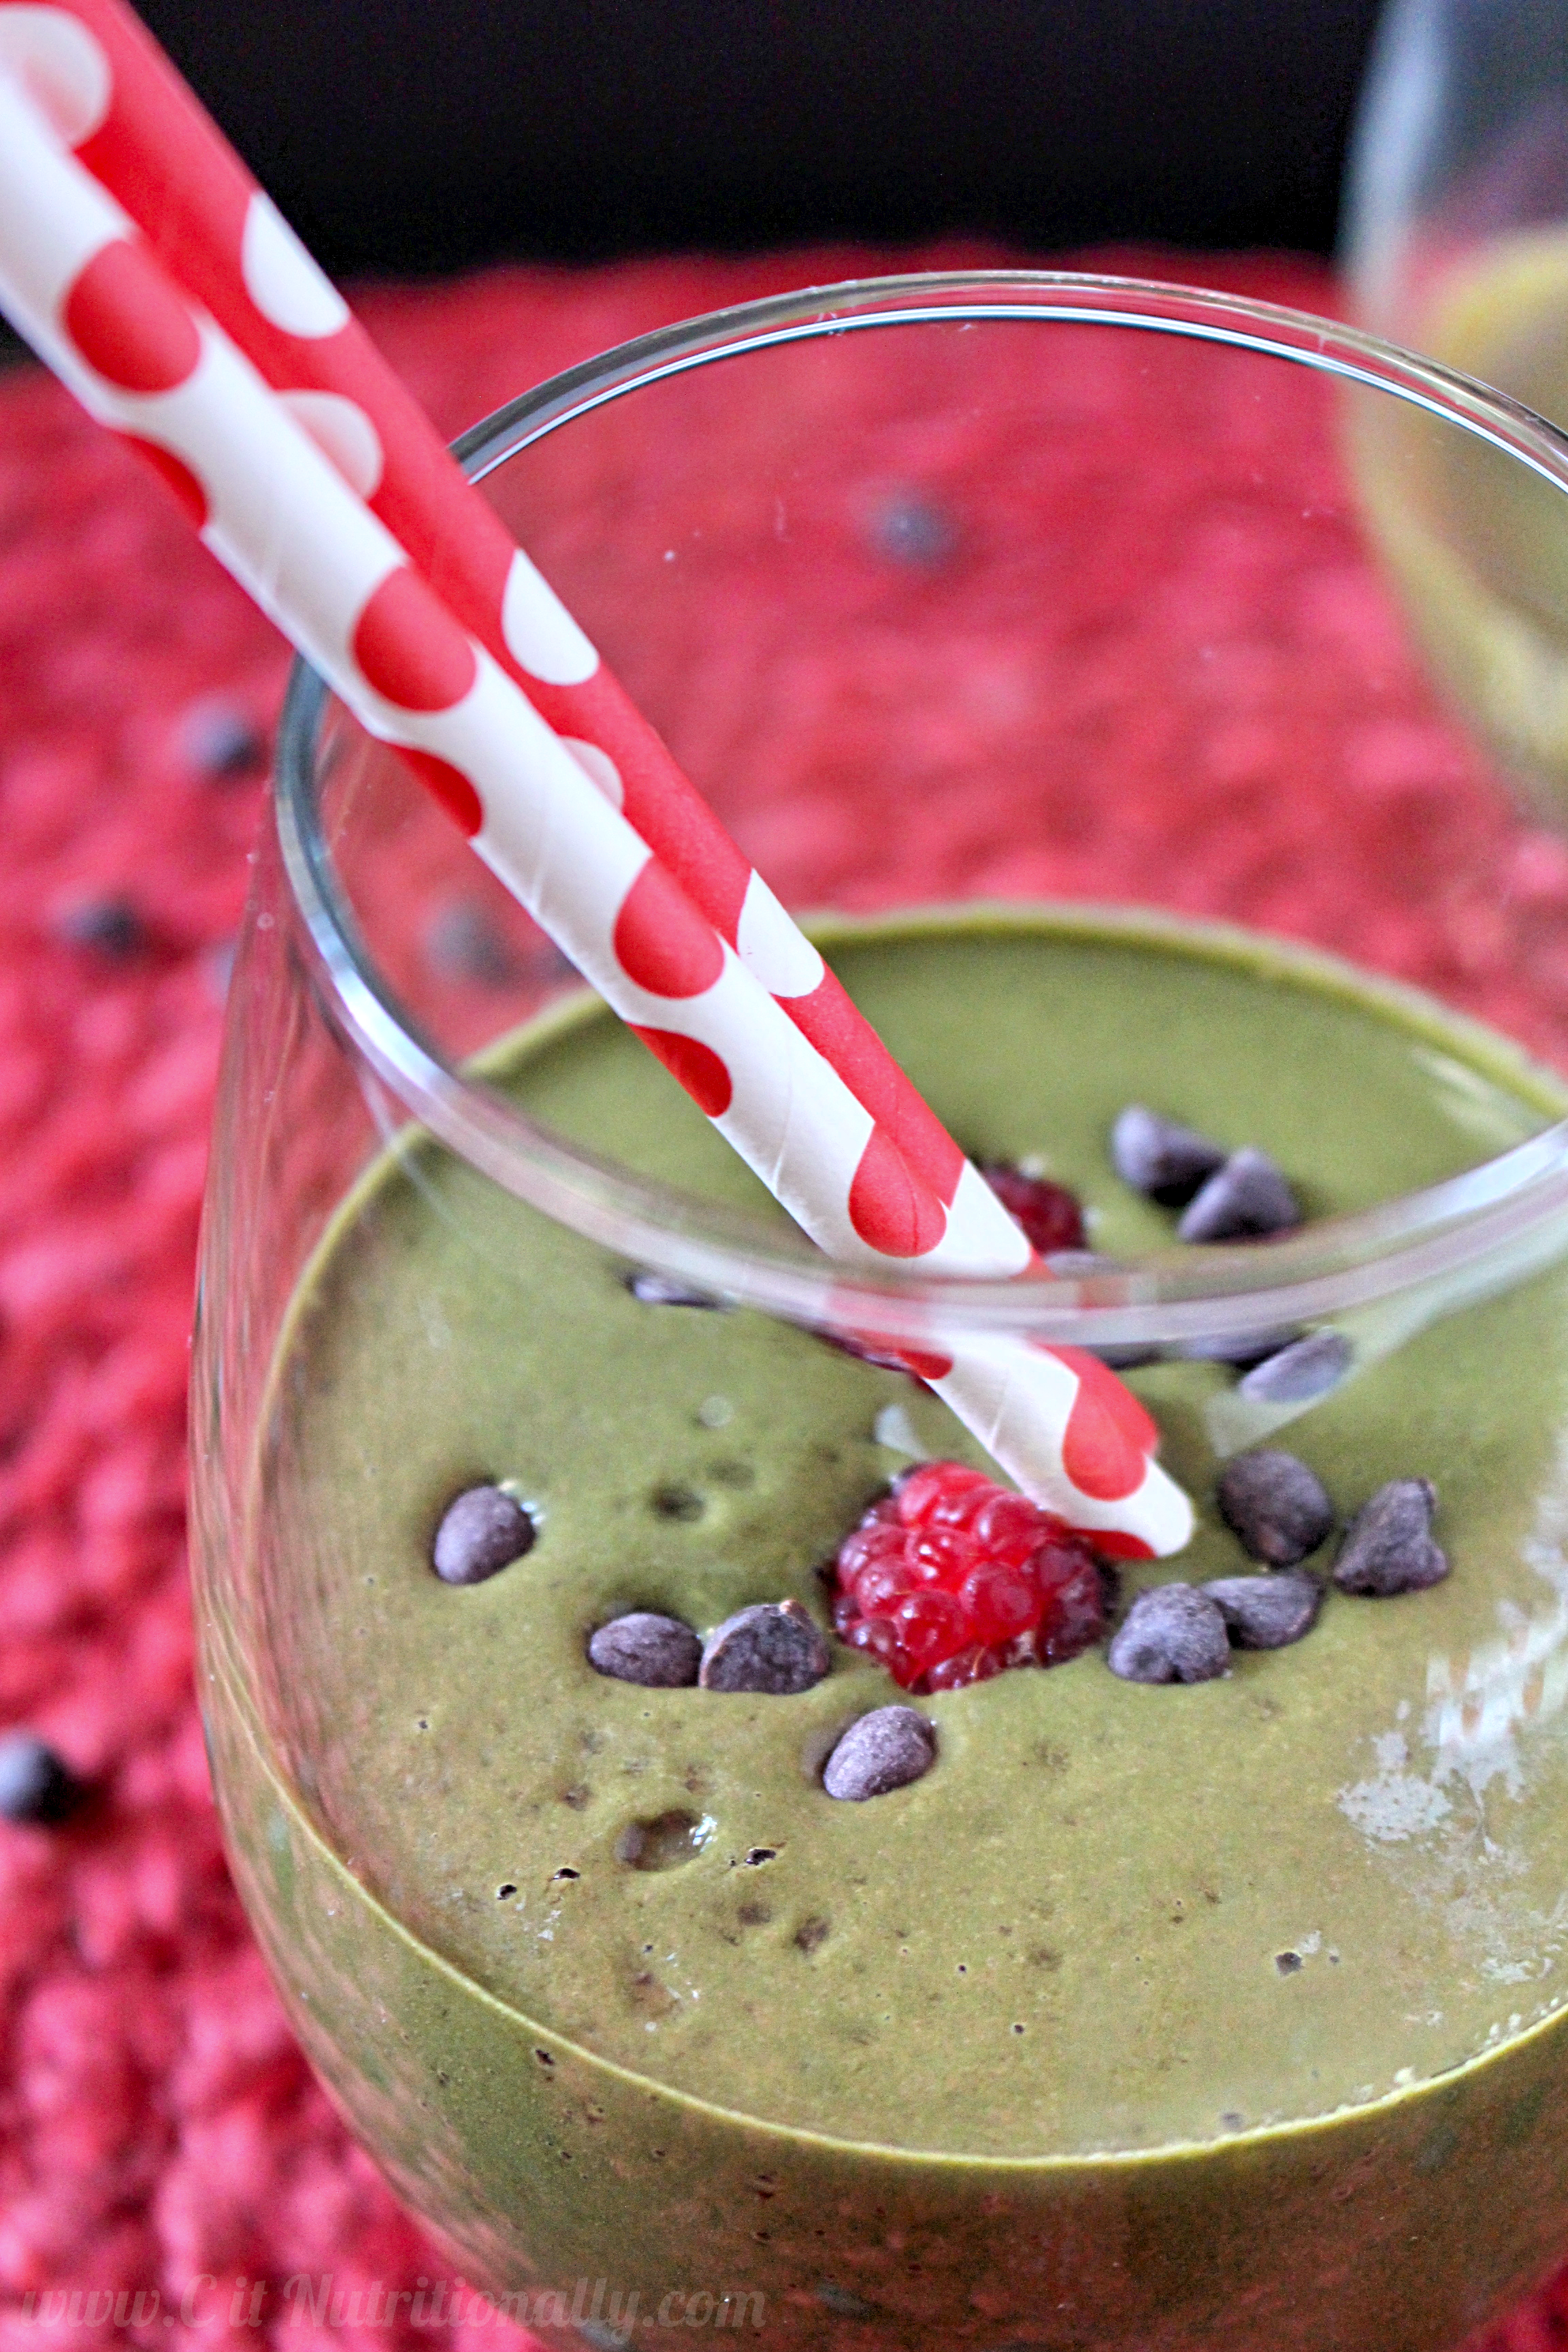 Chocolate Raspberry Green Smoothie | C it Nutritionally